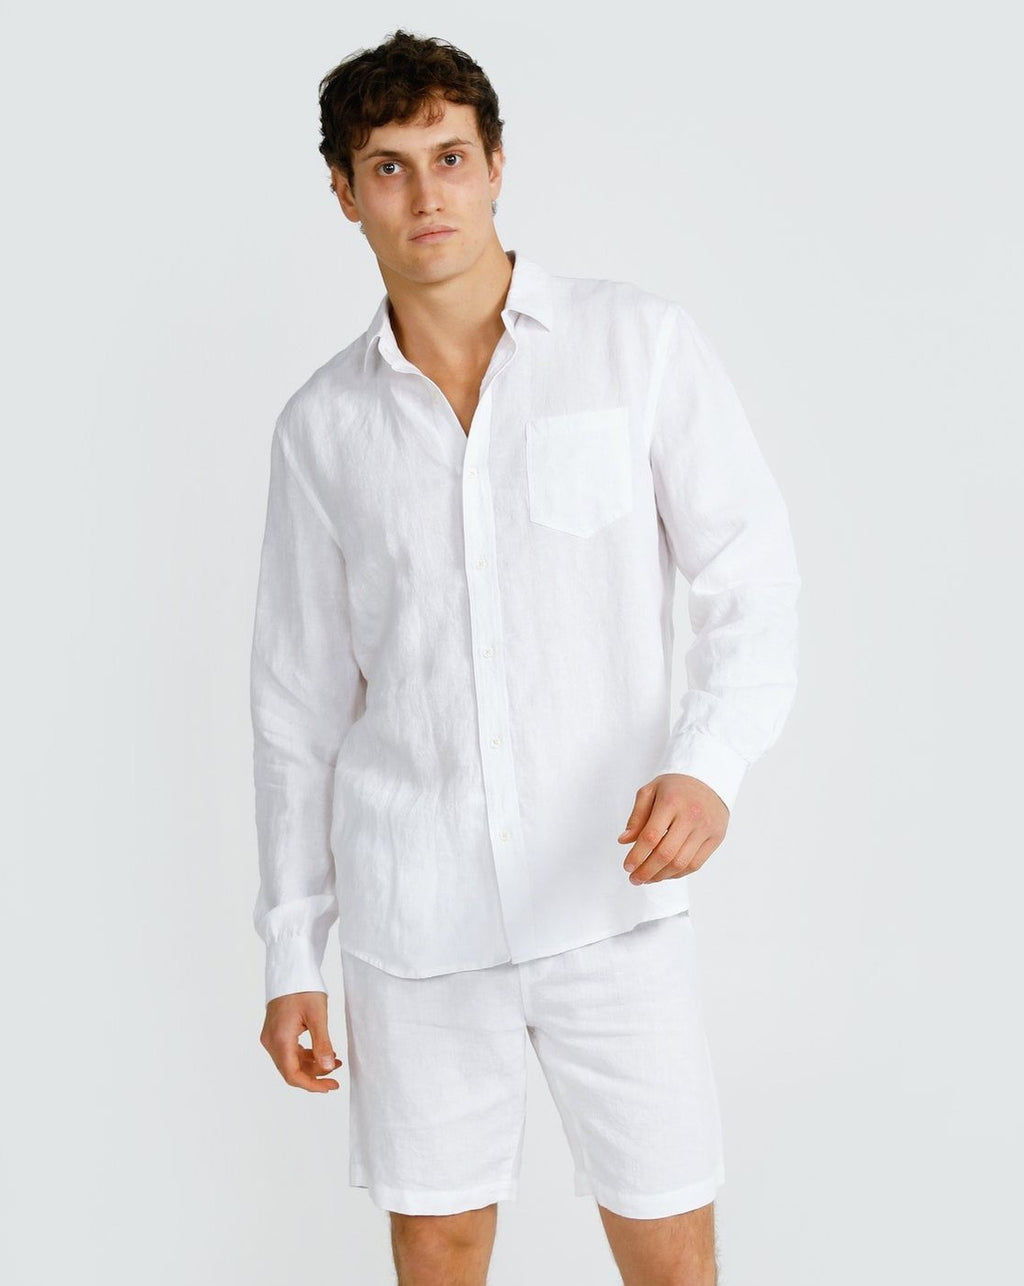 ORTC - Linen Shirt White